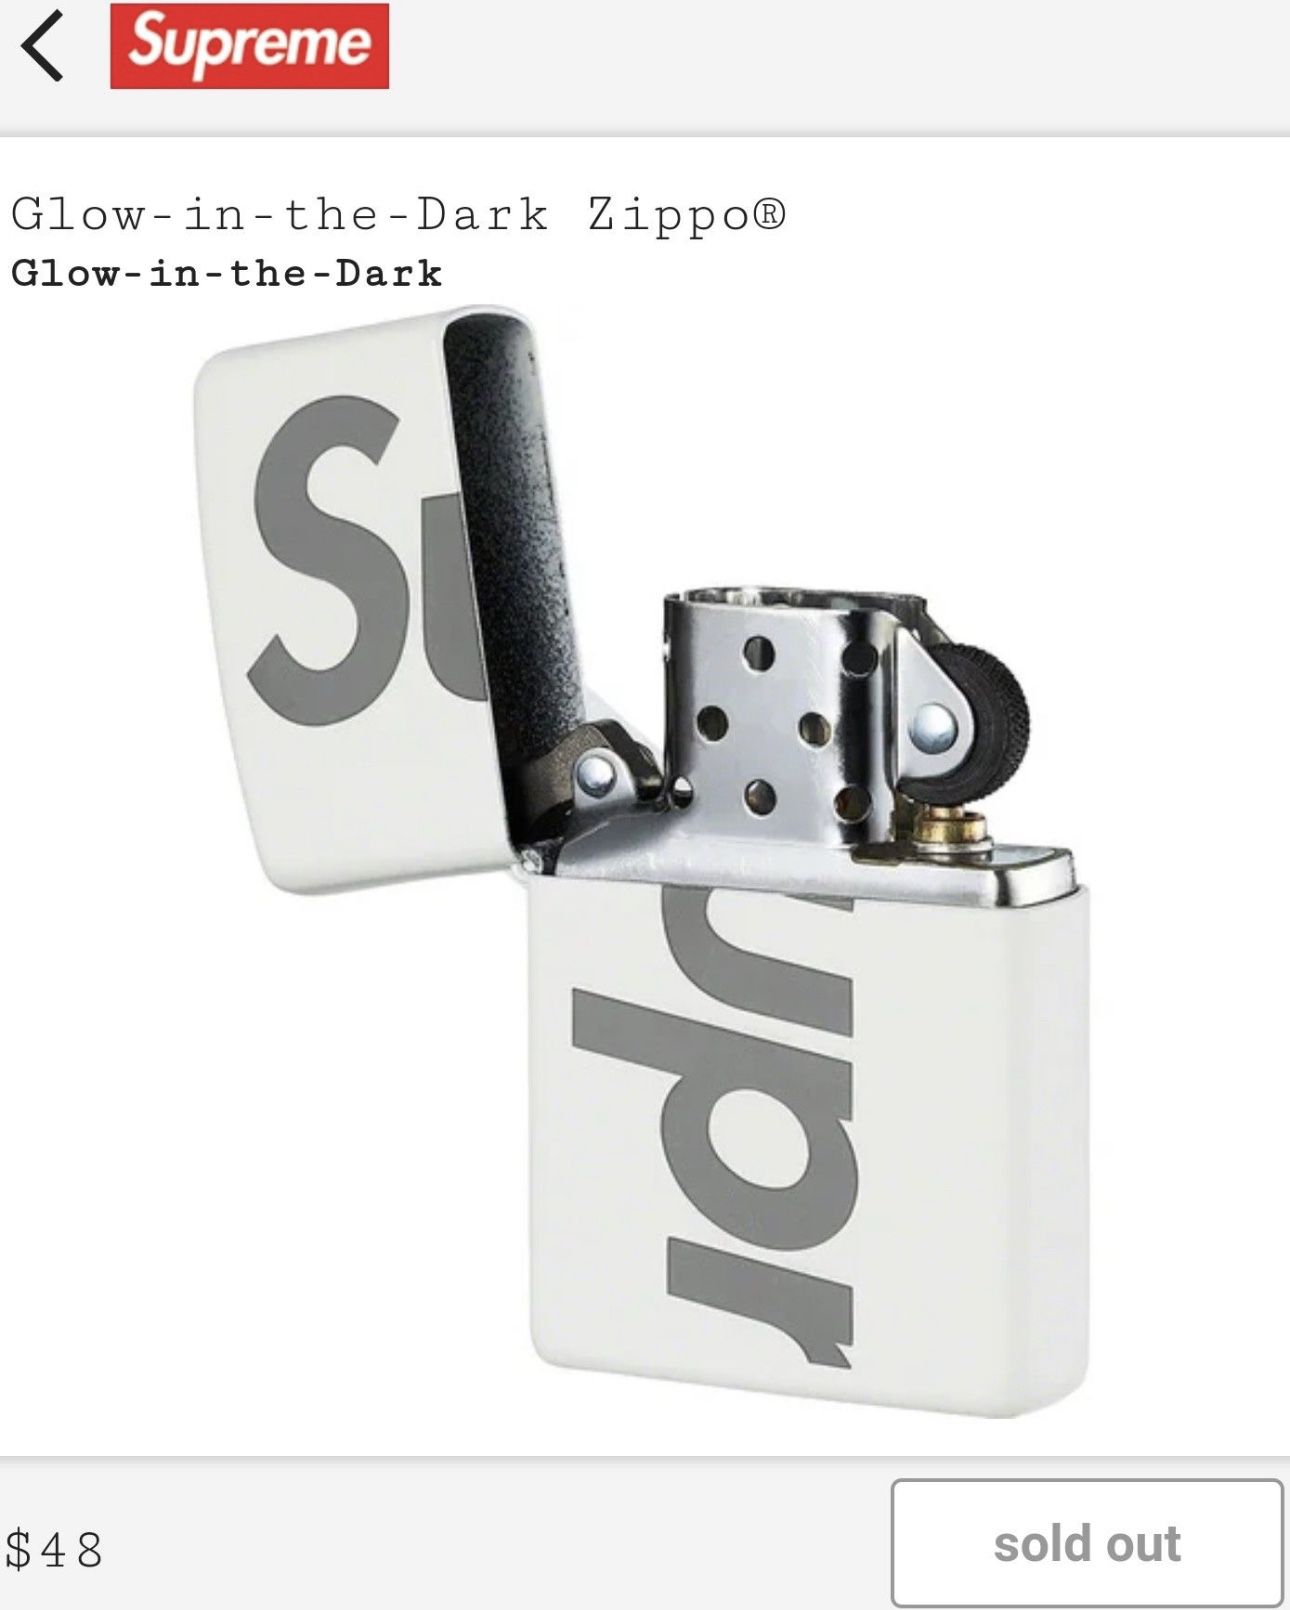 Supreme Glow In The Dark Zippo